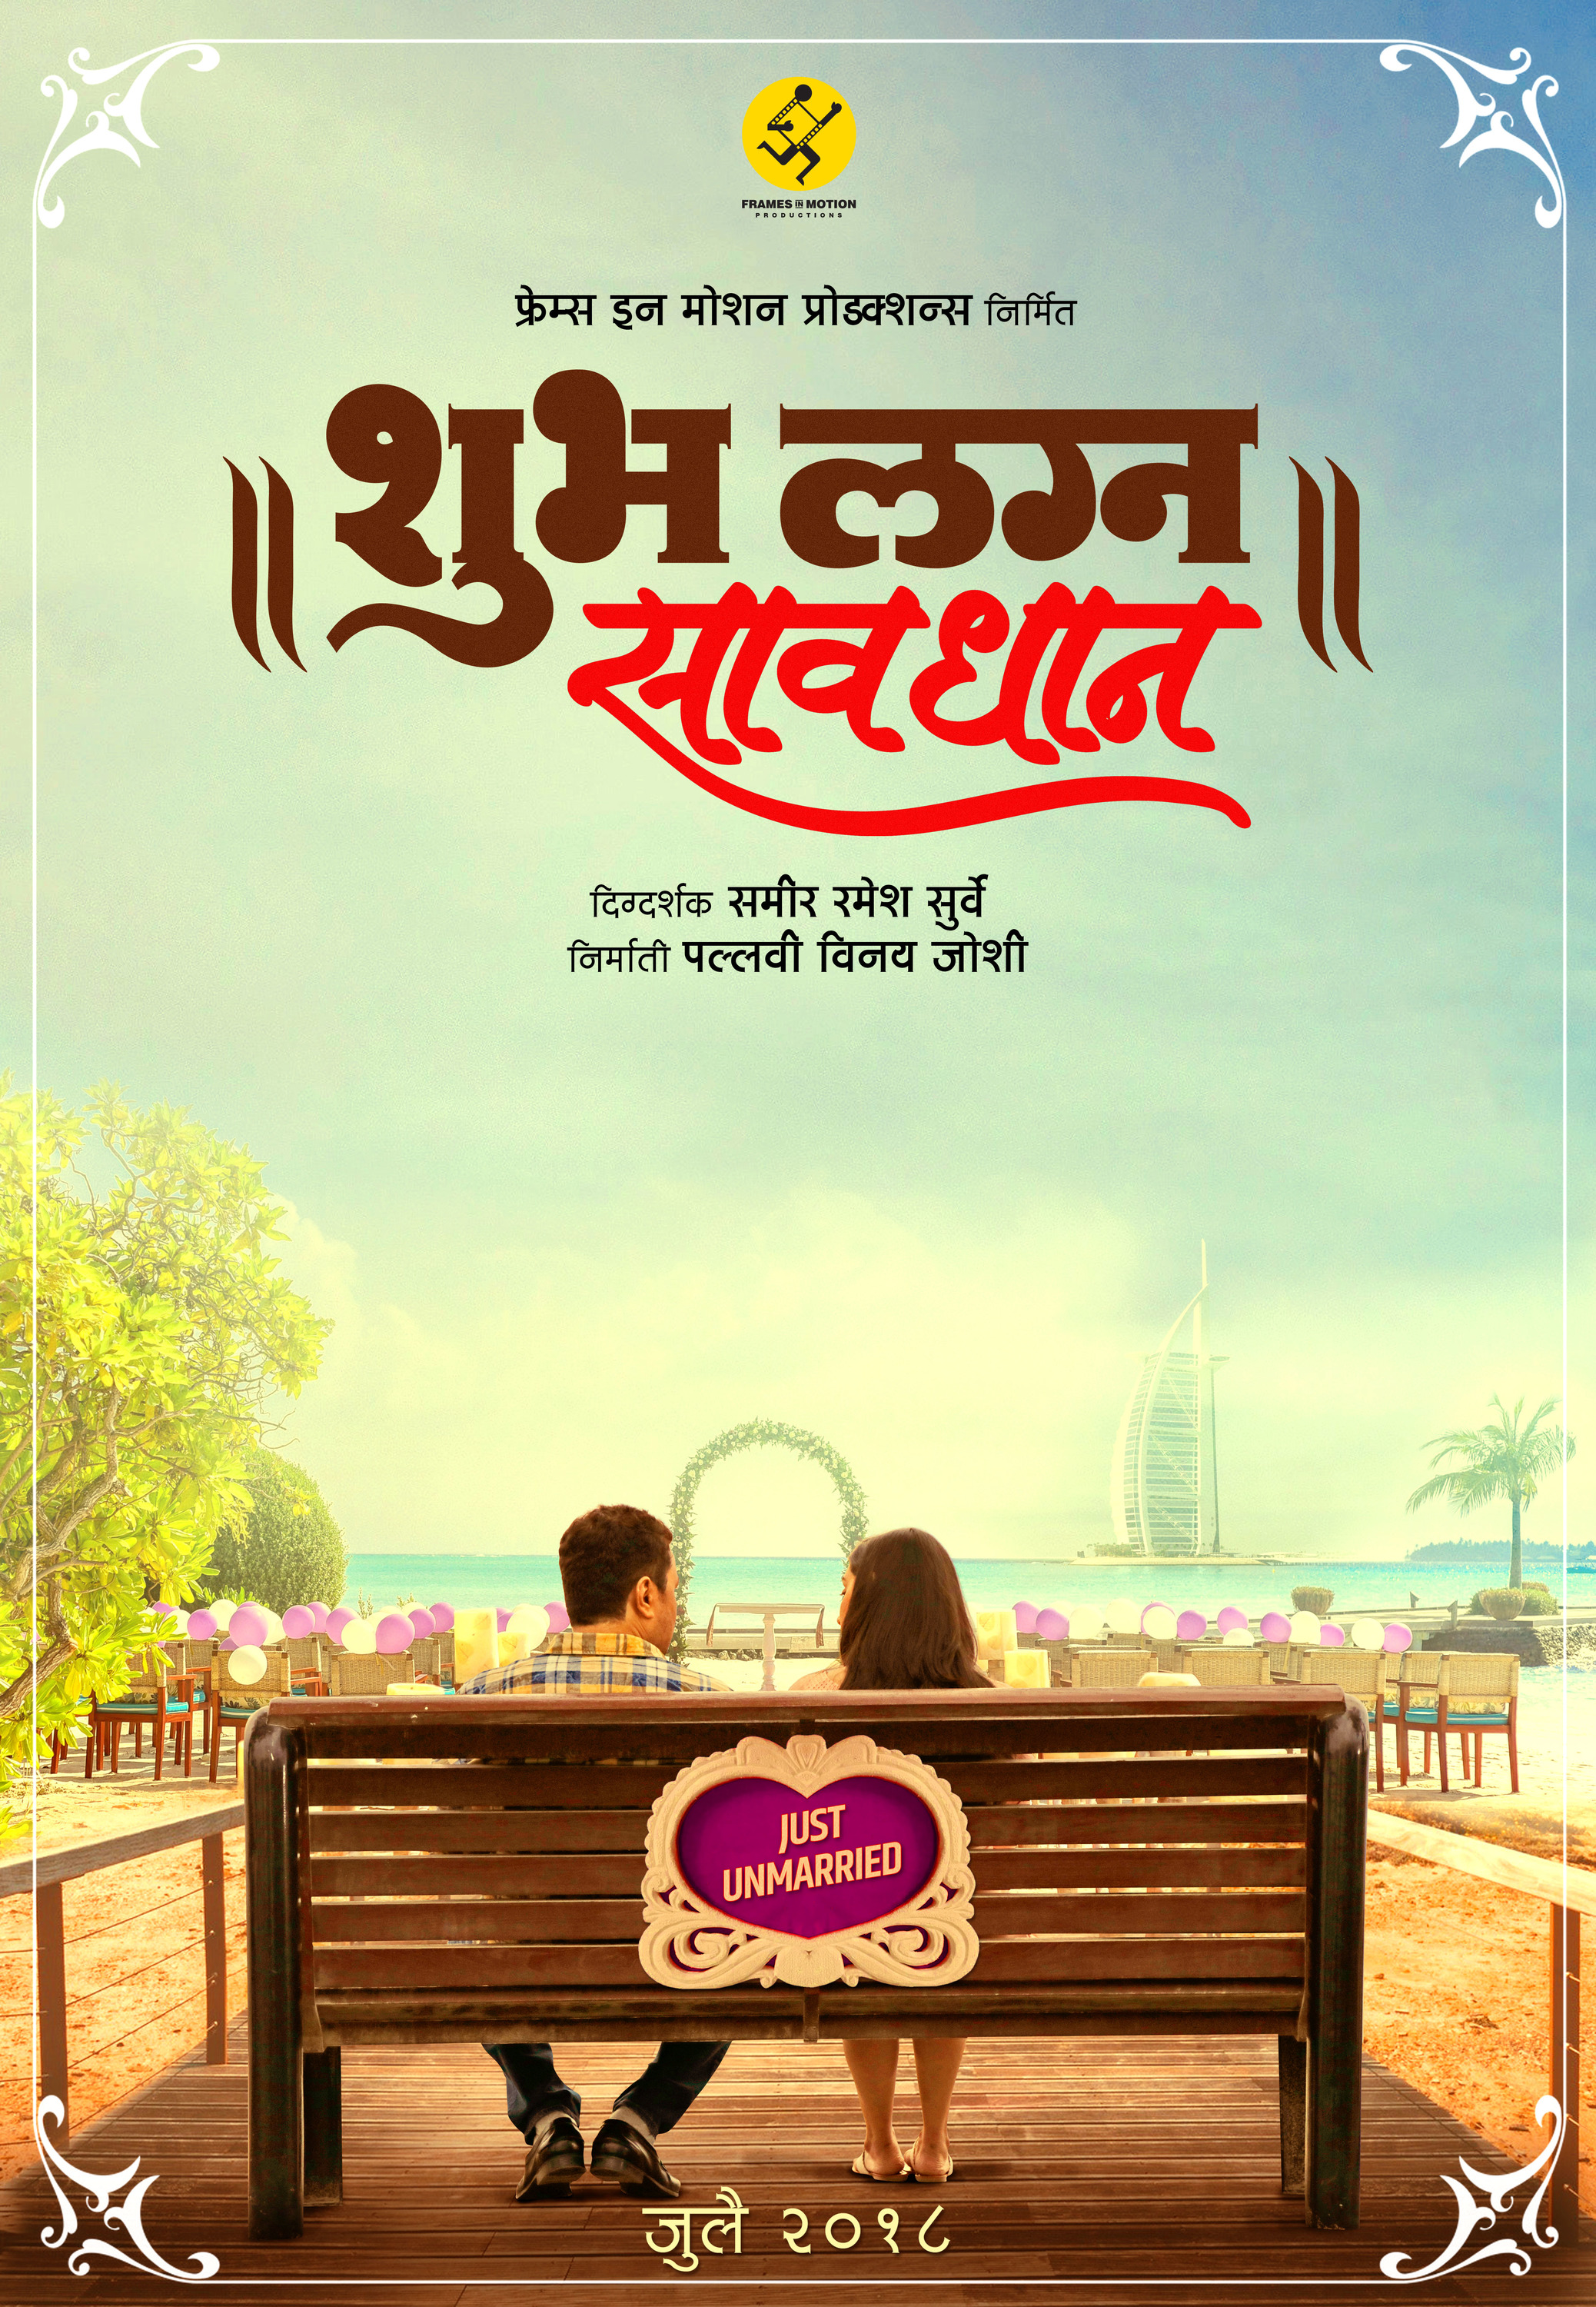 Mega Sized Movie Poster Image for Shubh Mangal Saavdhan (#5 of 5)